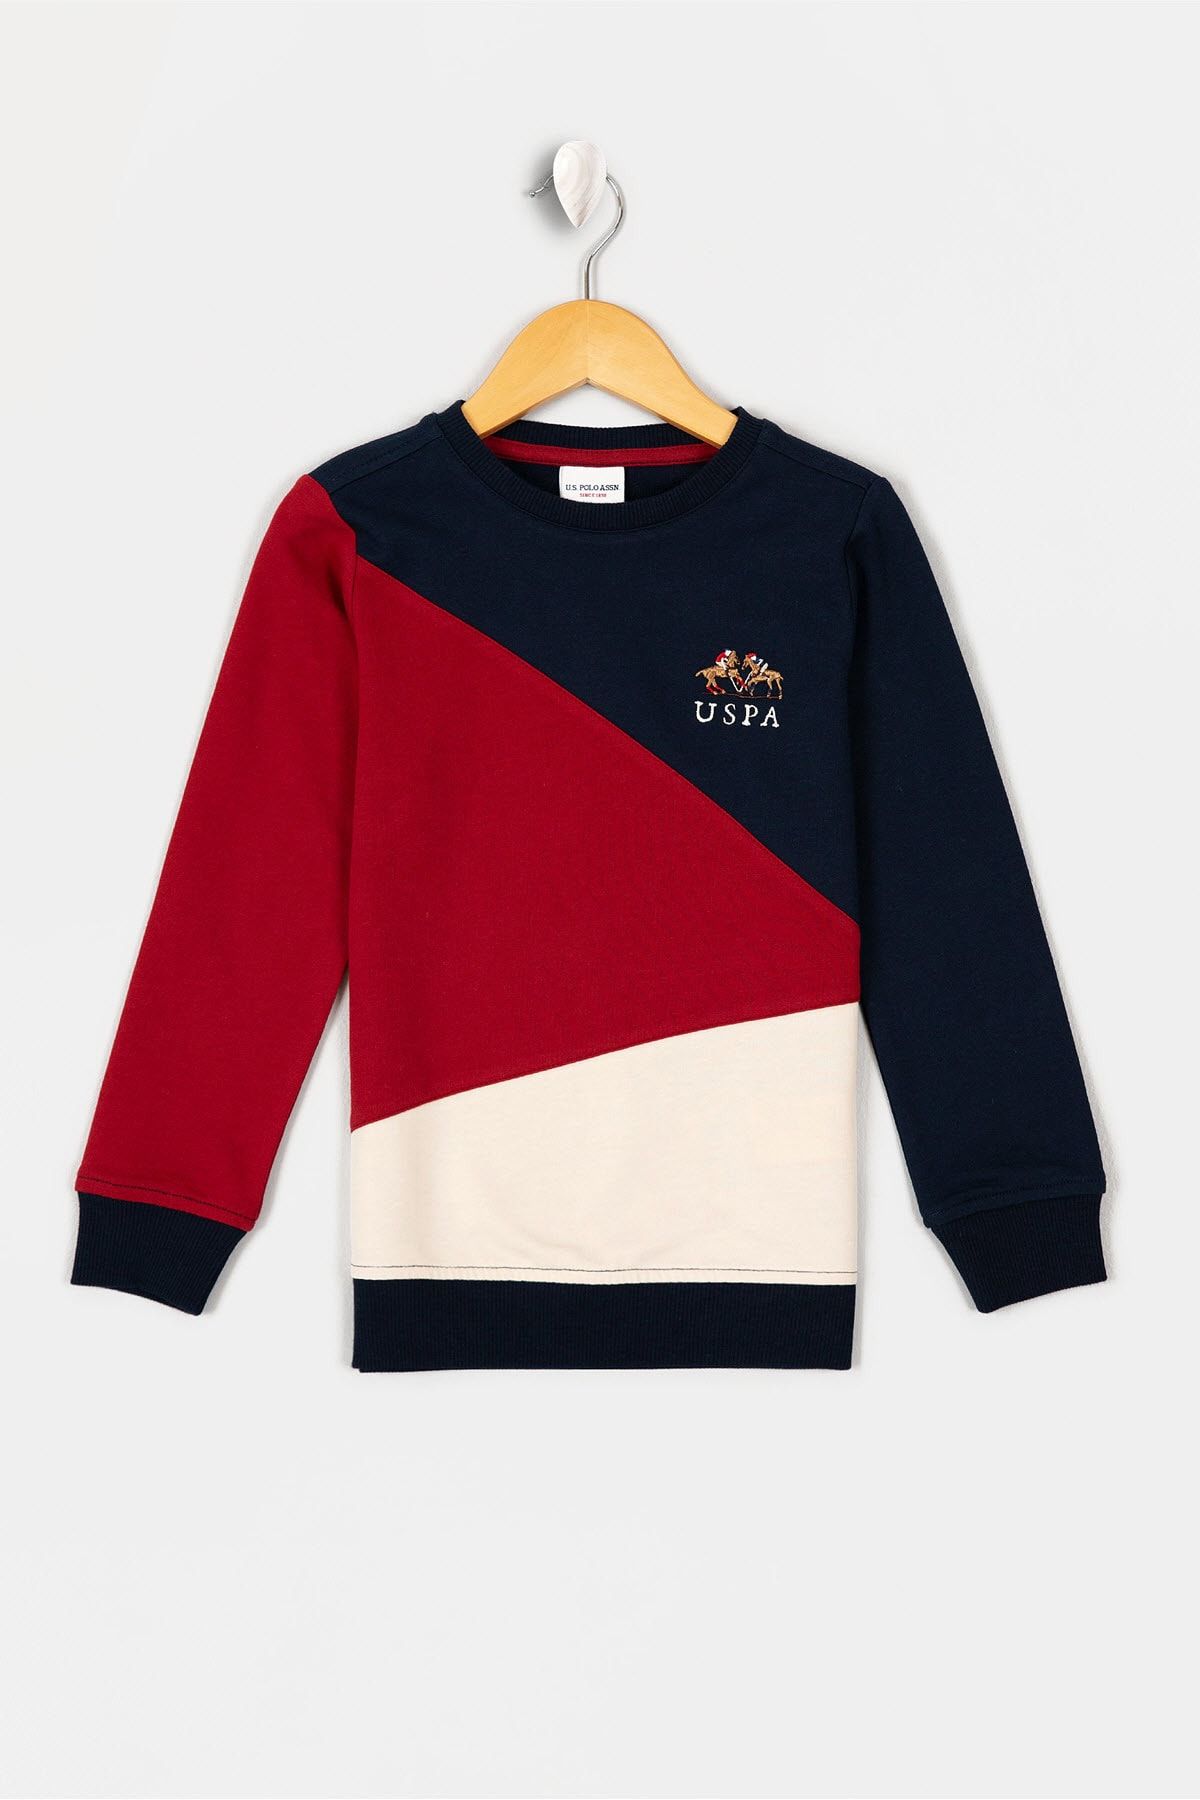 U.S. Polo Assn. Lacıvert Erkek Çocuk Sweatshirt